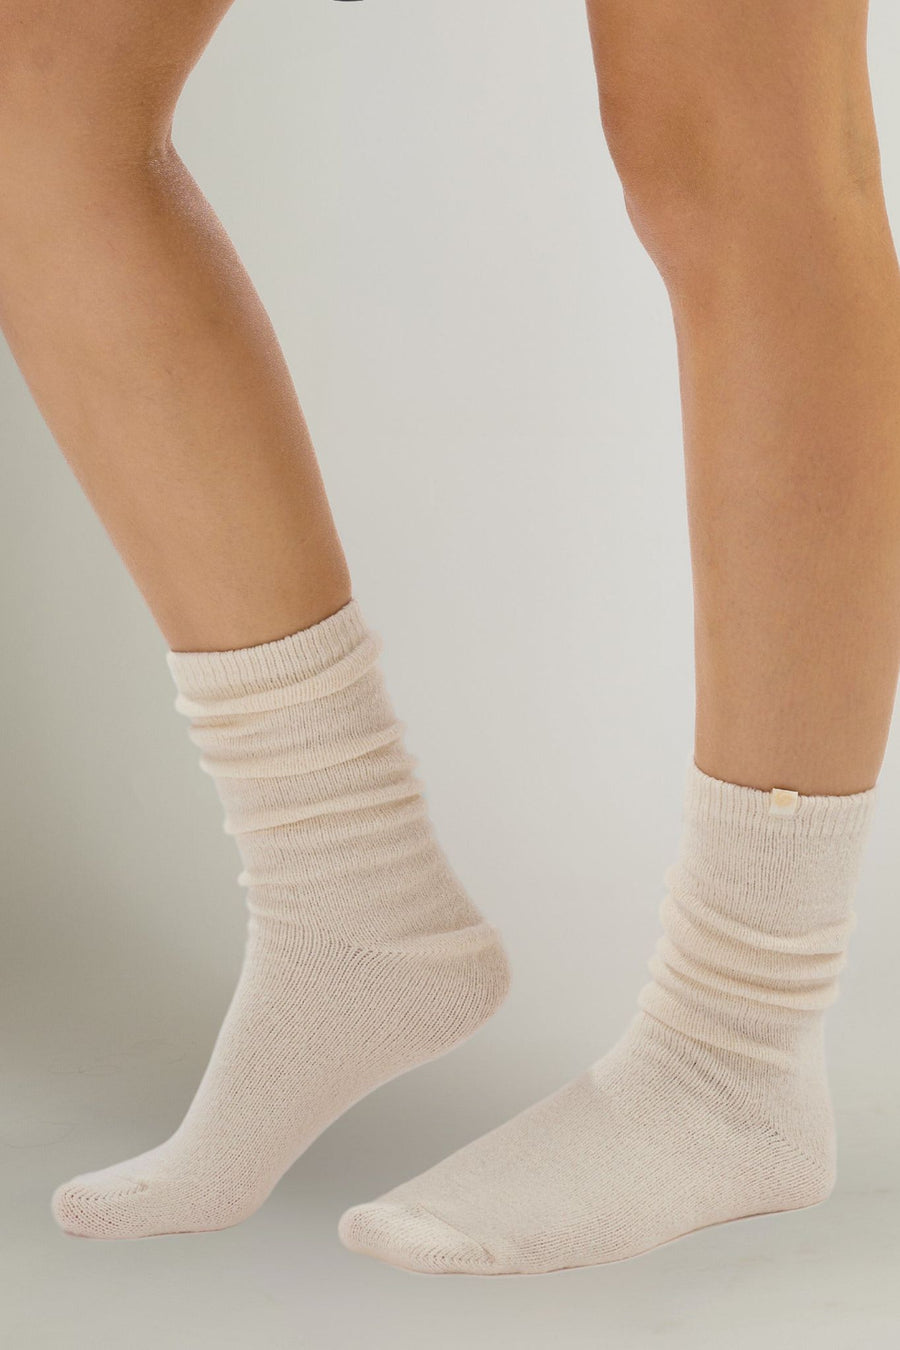 BAMBOO Ladies Starry Night Gentle Grip Socks by Sock Shop - Lord